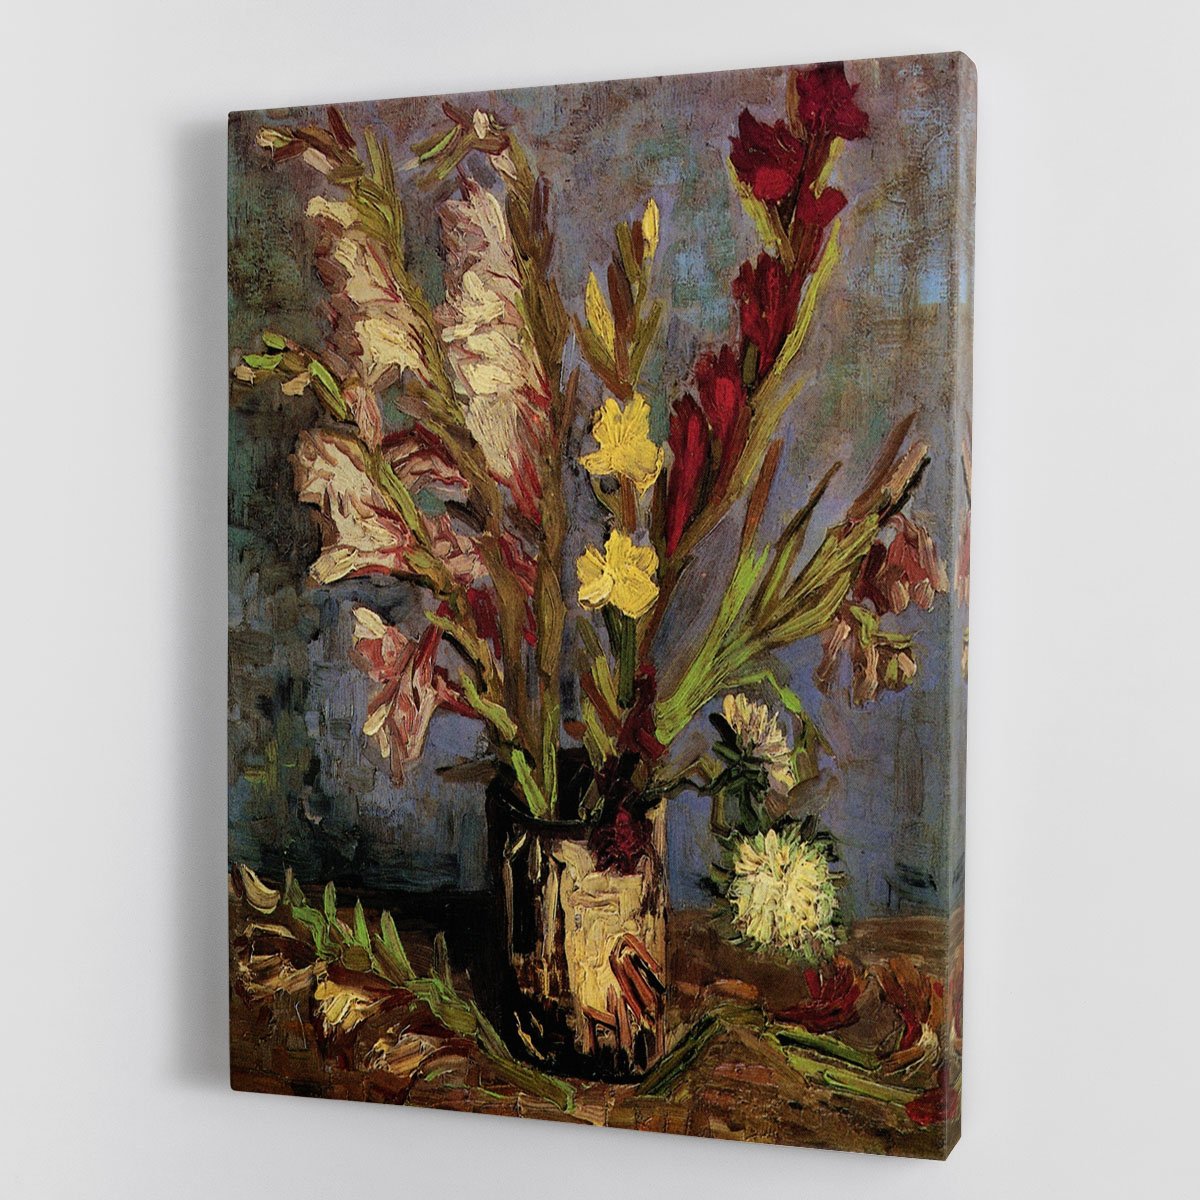 Vase with Gladioli 4 by Van Gogh Canvas Print or Poster